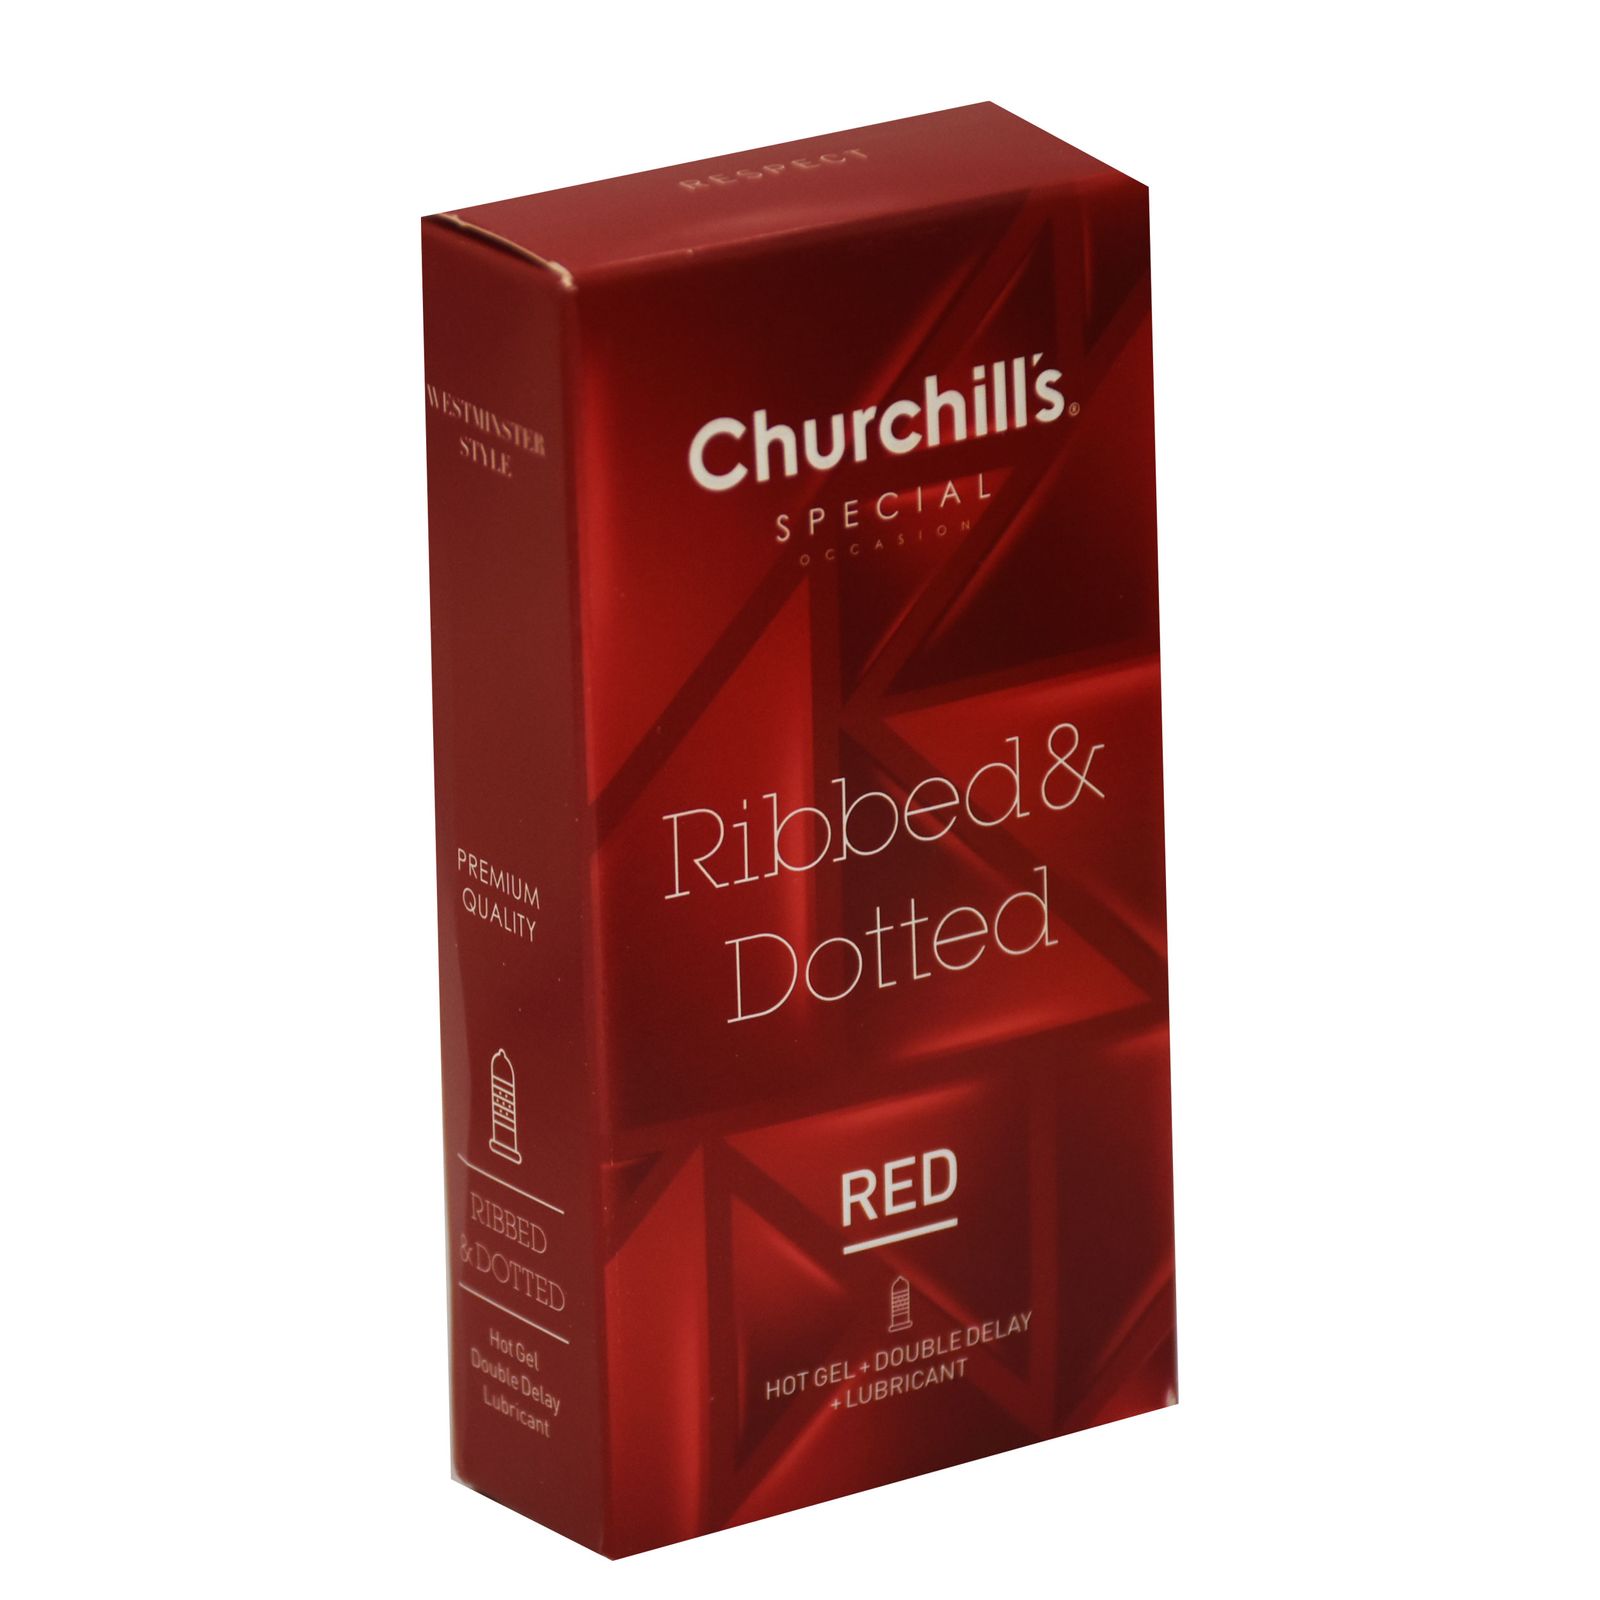 کاندوم چرچیلز مدل Ribbed & Dotted Red بسته 12 عددی -  - 5